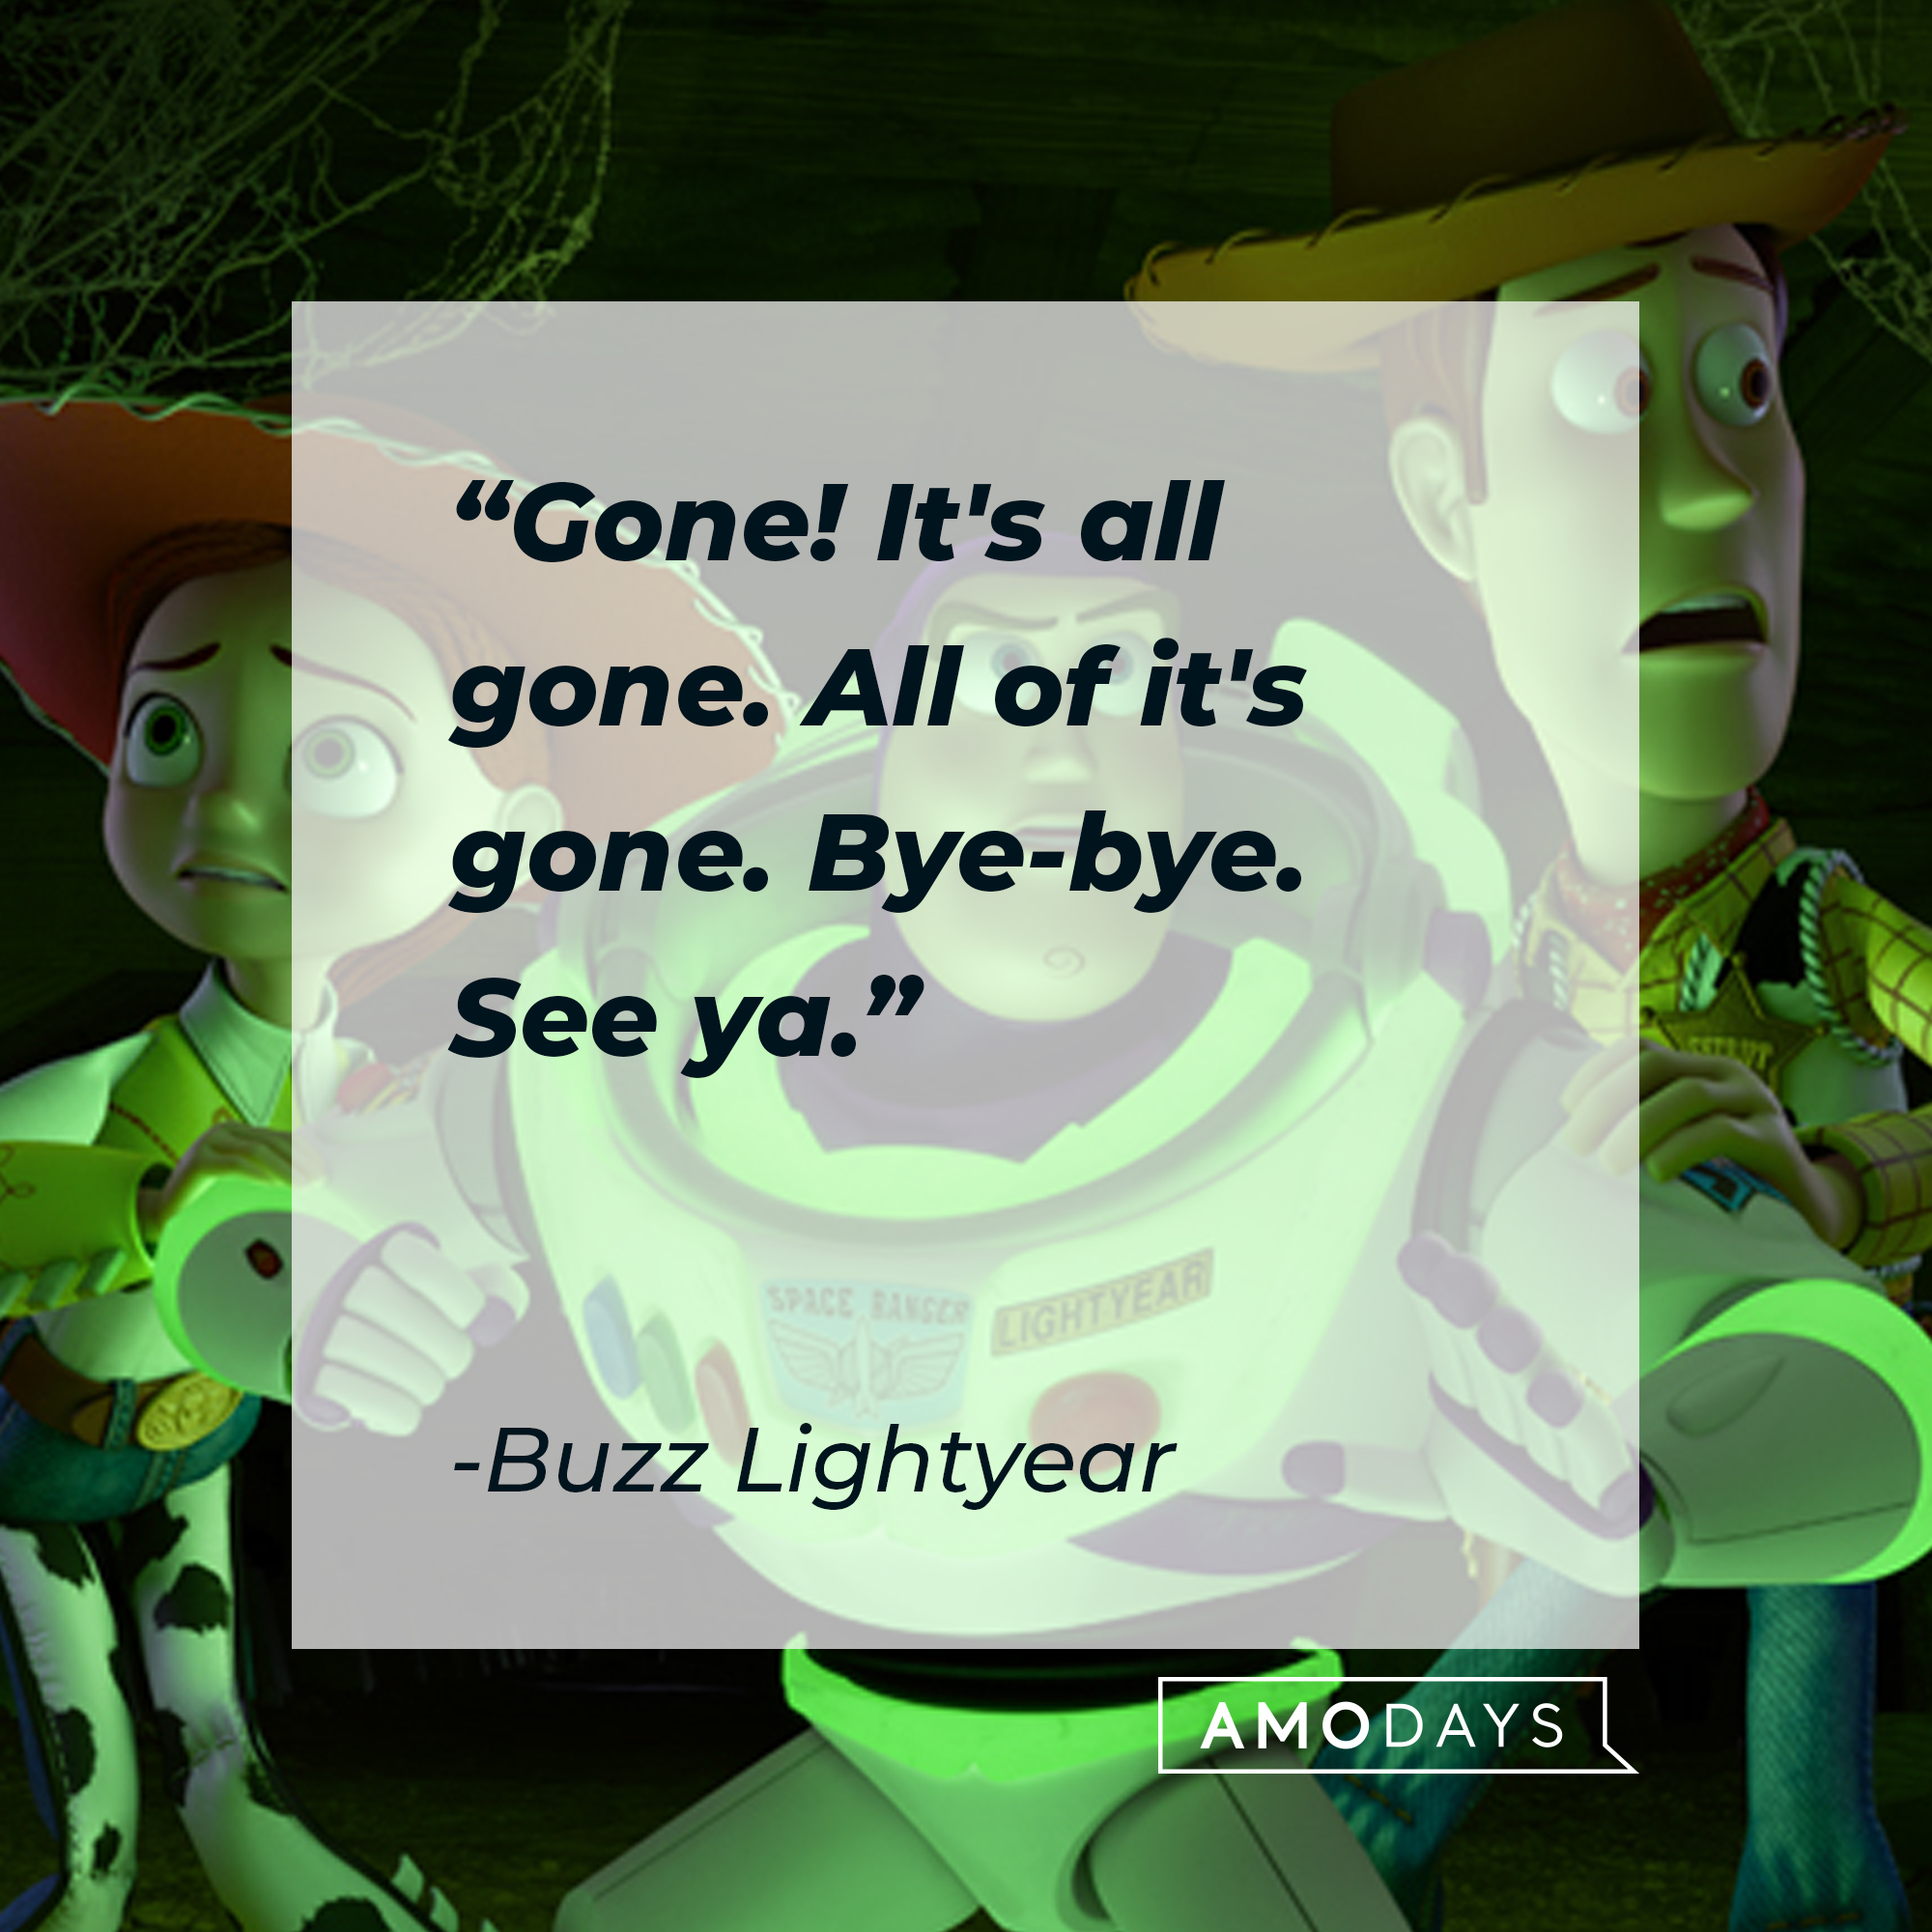 Buzz Lightyear's quote: "Gone! It's all gone. All of it's gone. Bye-bye. See ya." | Source: Facebook/BuzzLightyear